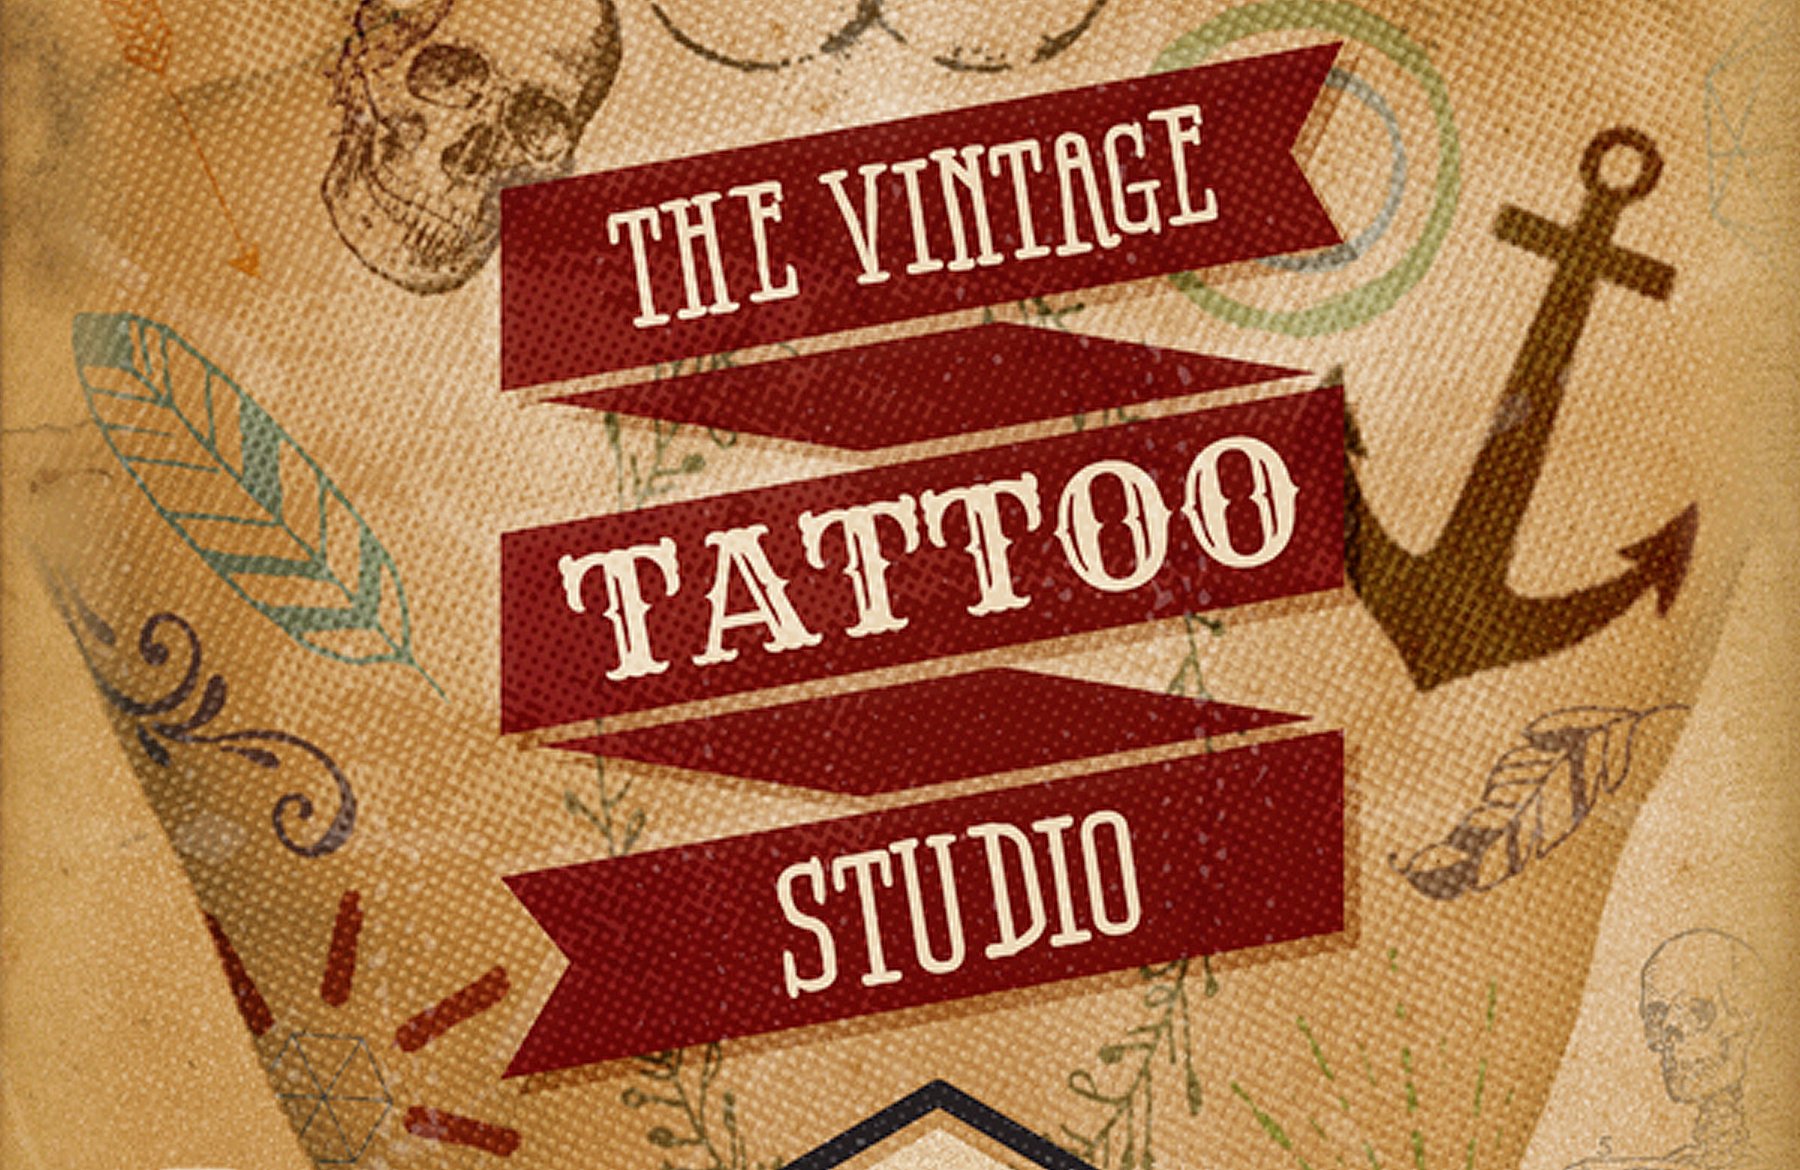 Tattoo Studio Poster  Tattoo Studio Poster Maker  BrandCrowd